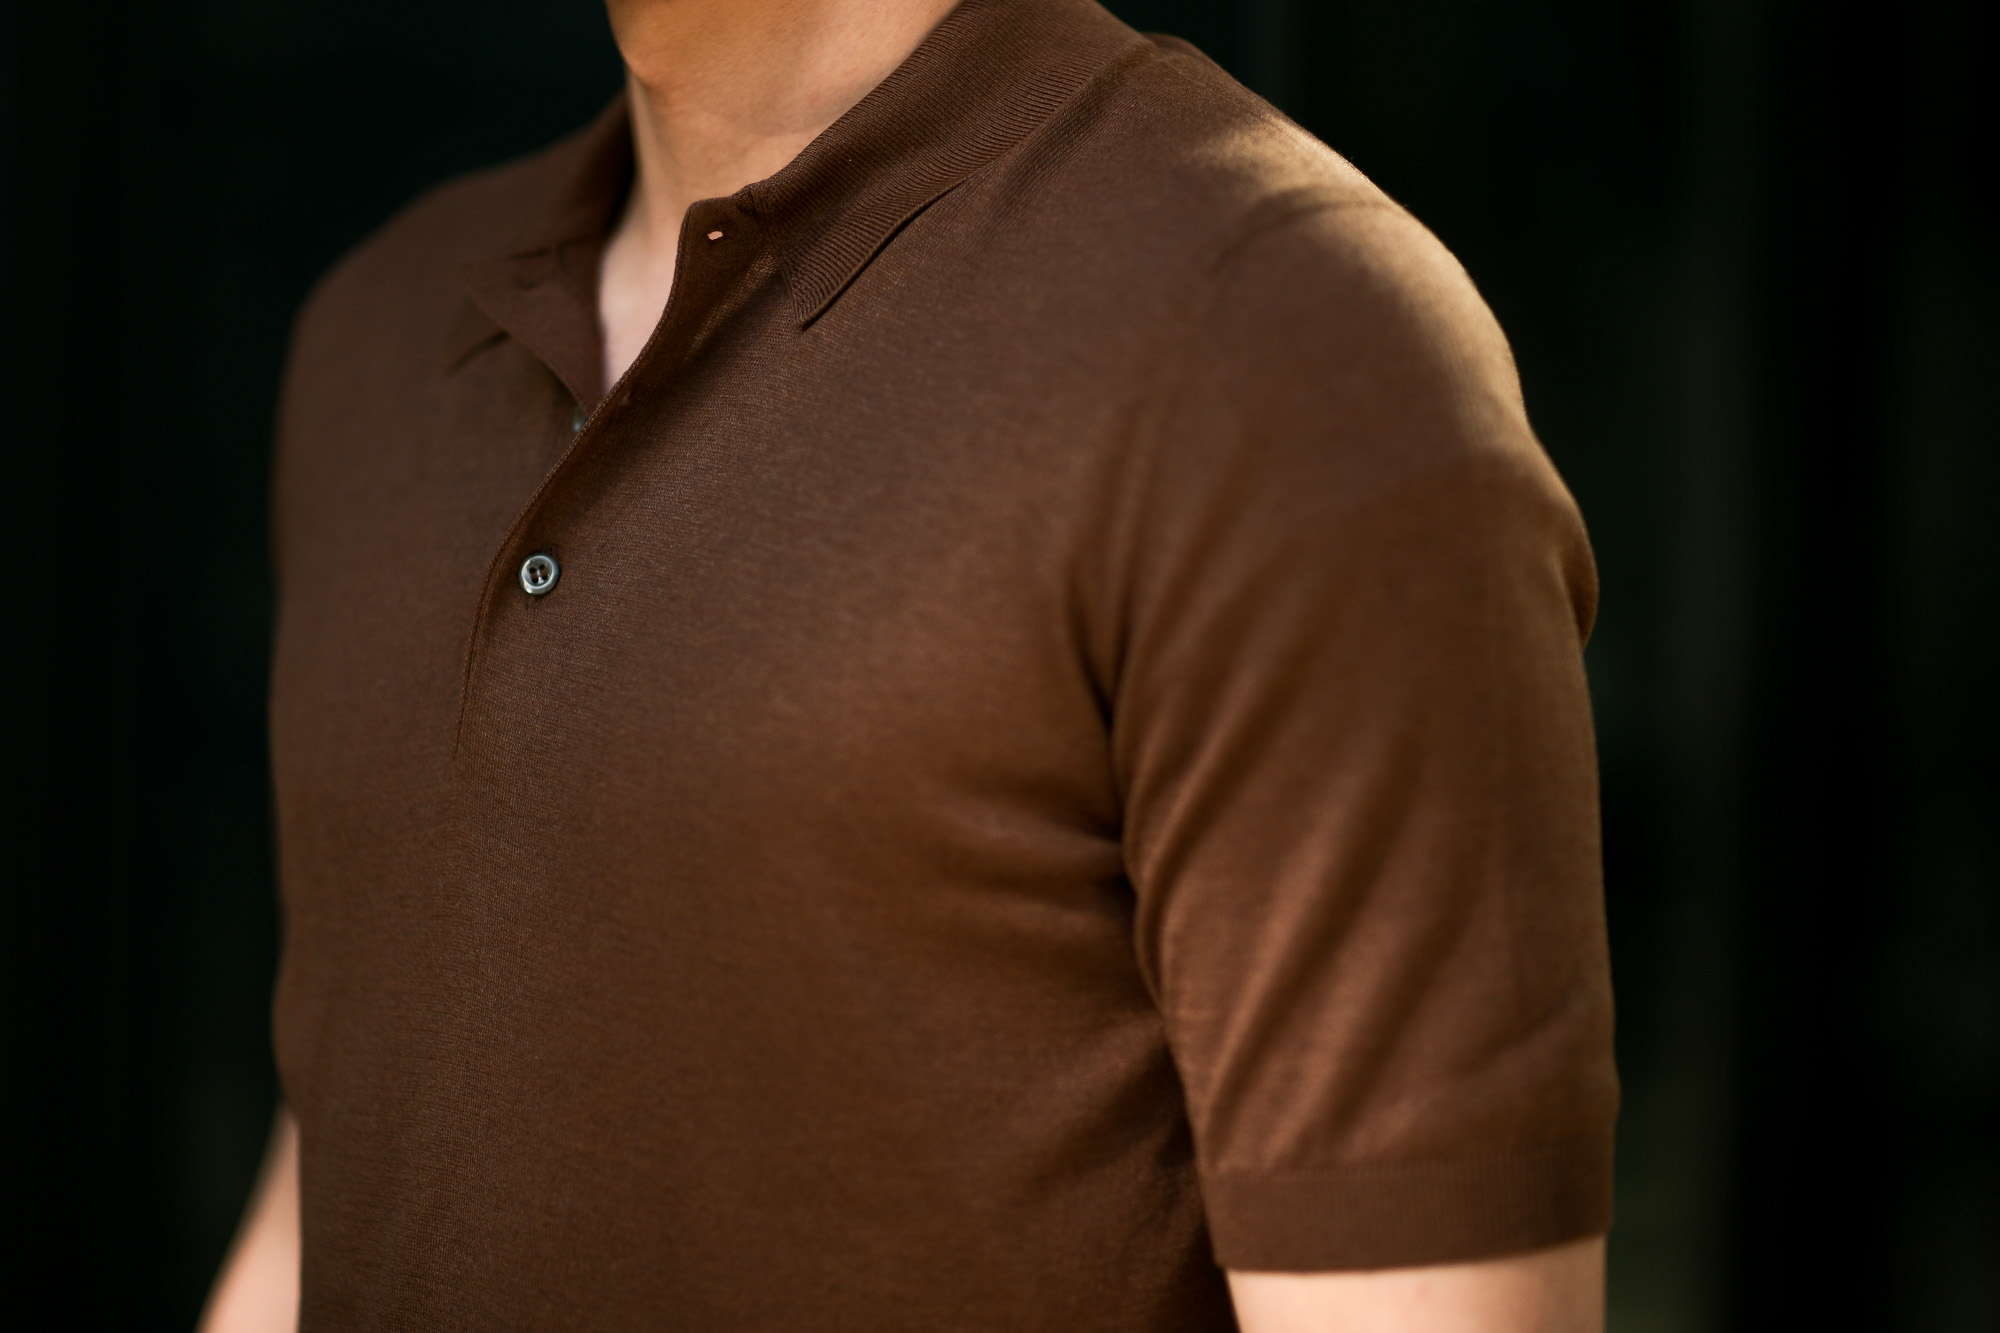 Gran Sasso (グランサッソ) Silk Knit Polo Shirt (シルクニットポロシャツ) SETA (シルク 100%) シルク ニット ポロシャツ GOLD (ゴールド・170) made in italy (イタリア製) 2020 春夏新作  愛知 名古屋 altoediritto アルトエデリット